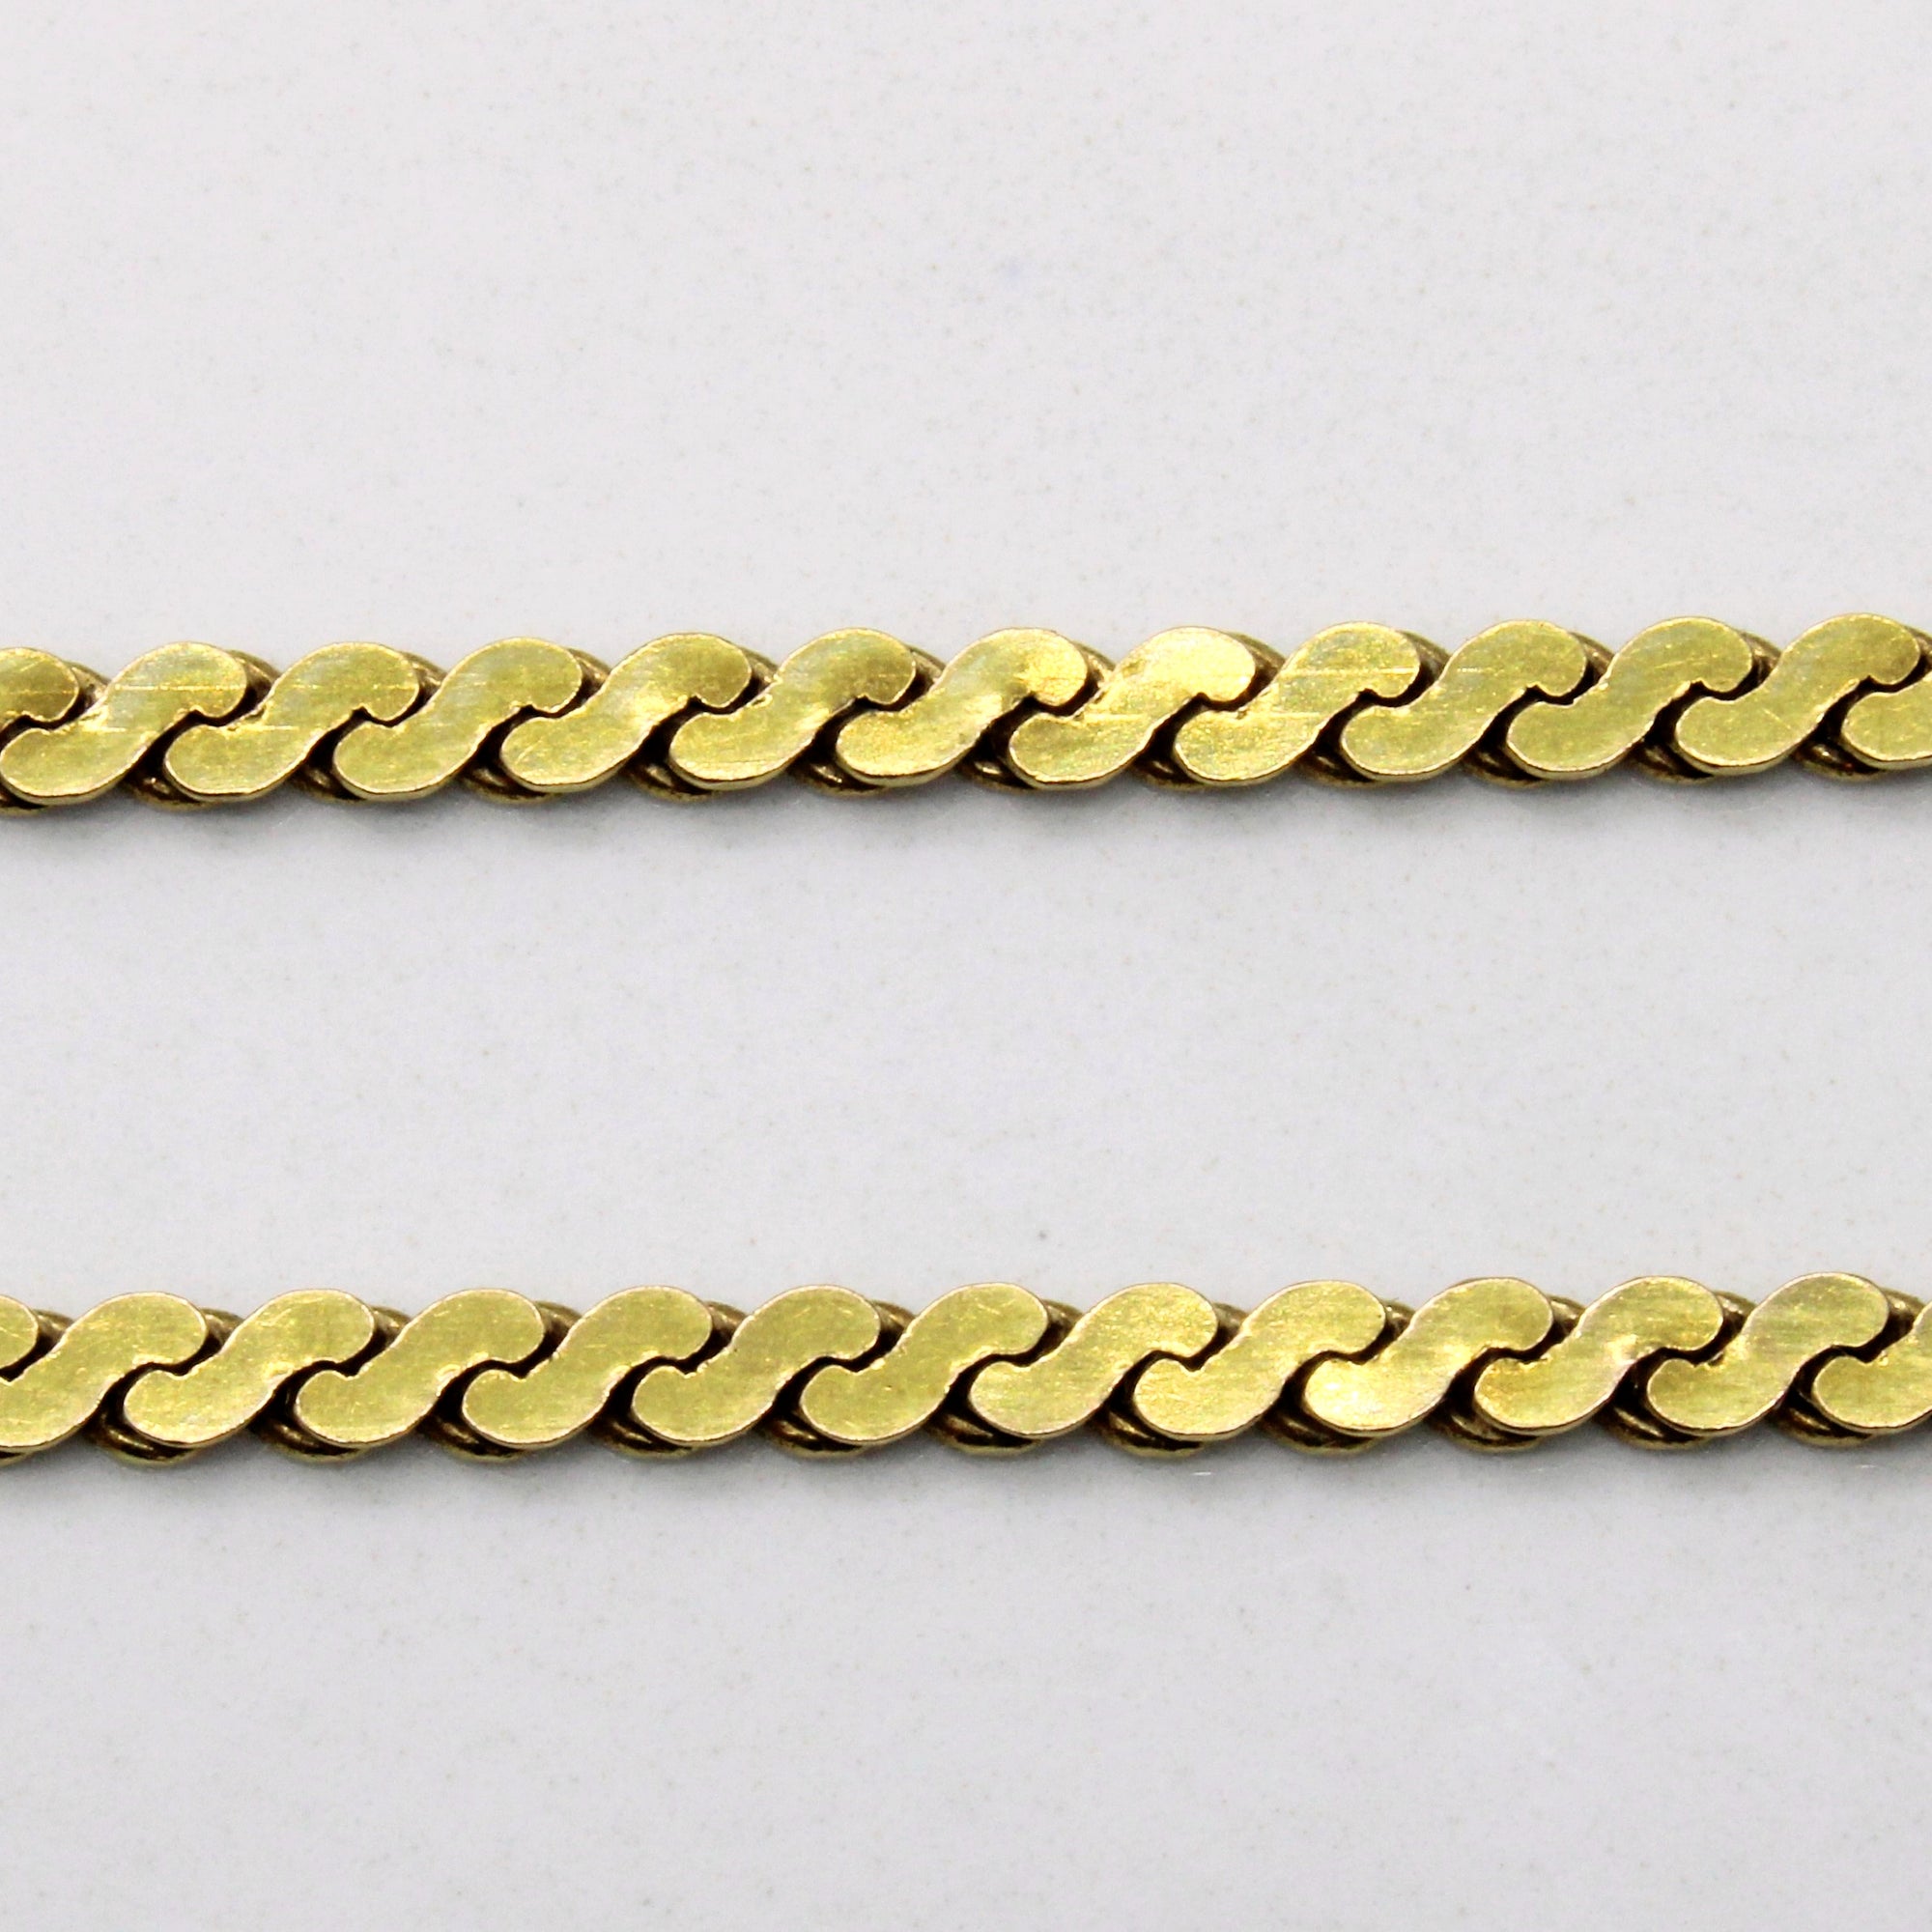 10k Yellow Gold Serpentine Chain | 24